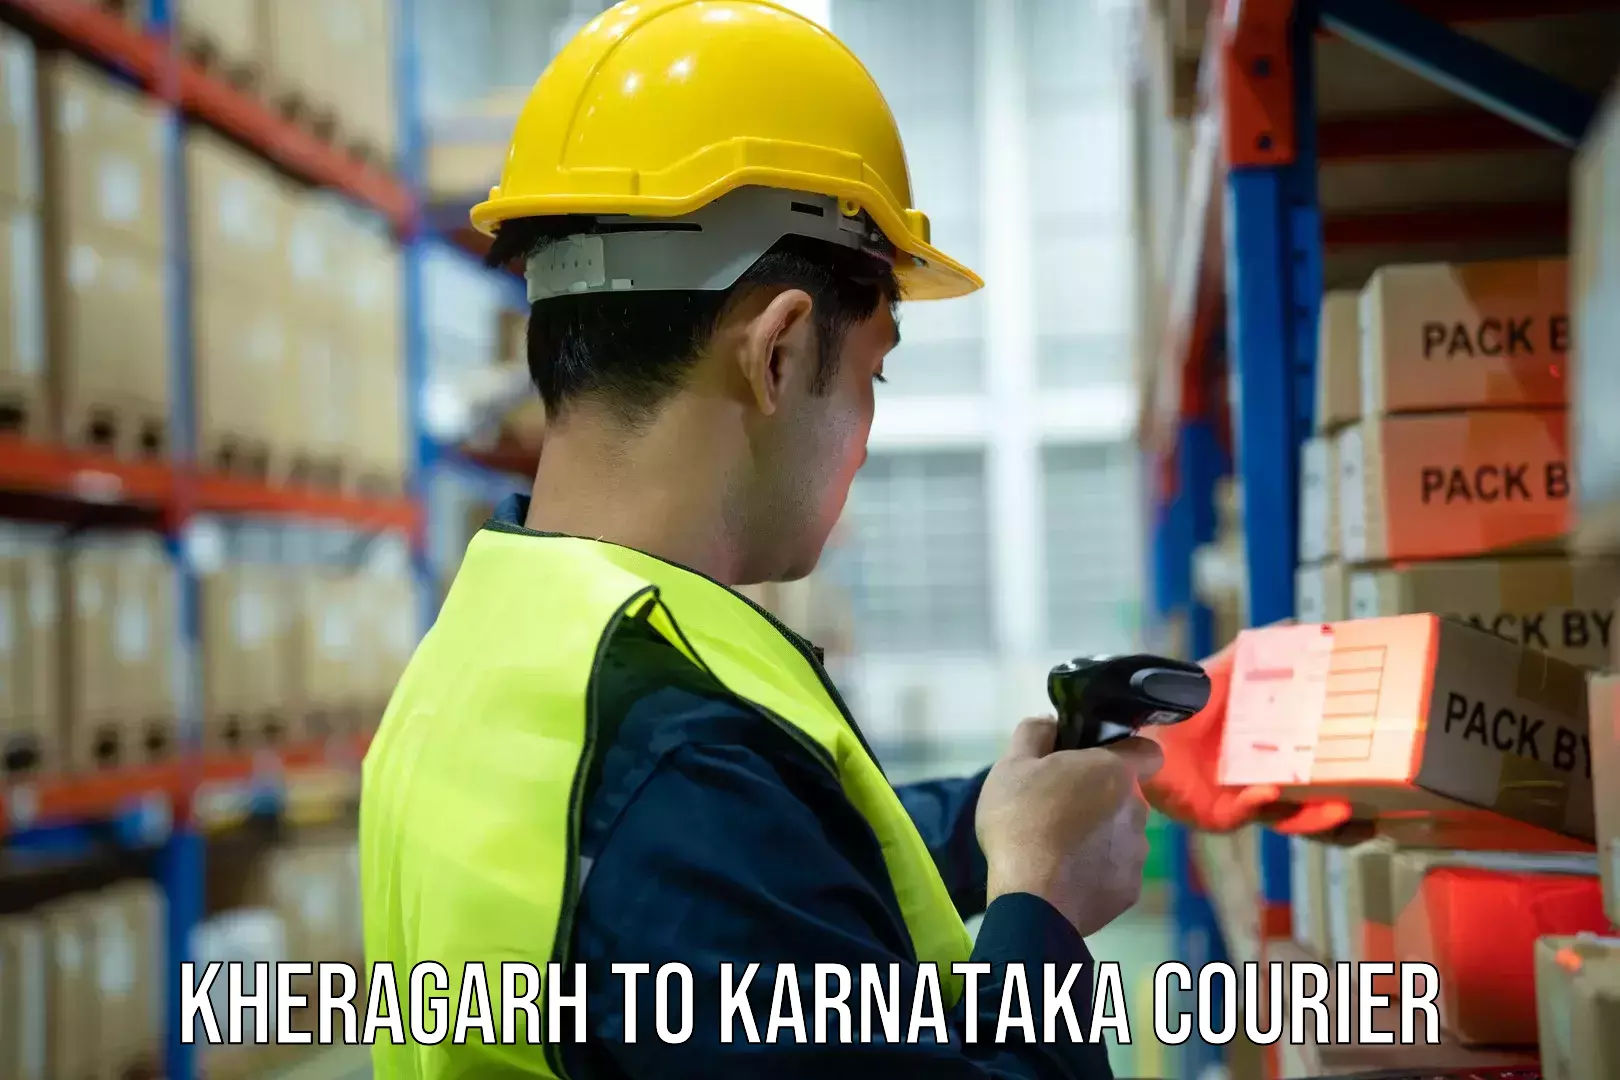 High-efficiency logistics Kheragarh to Karnataka